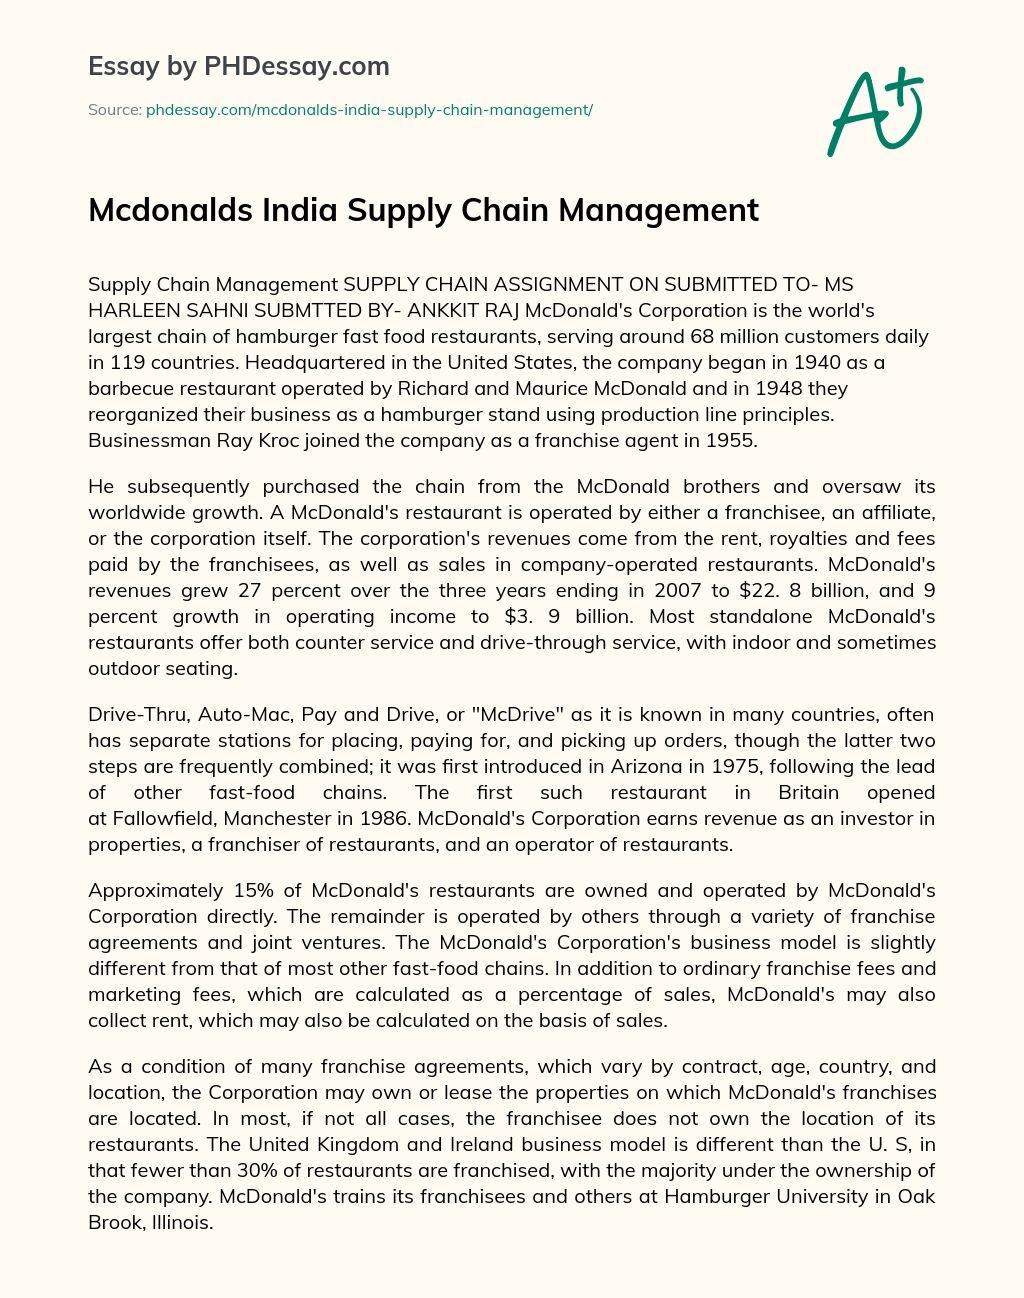 Mcdonalds India Supply Chain Management essay